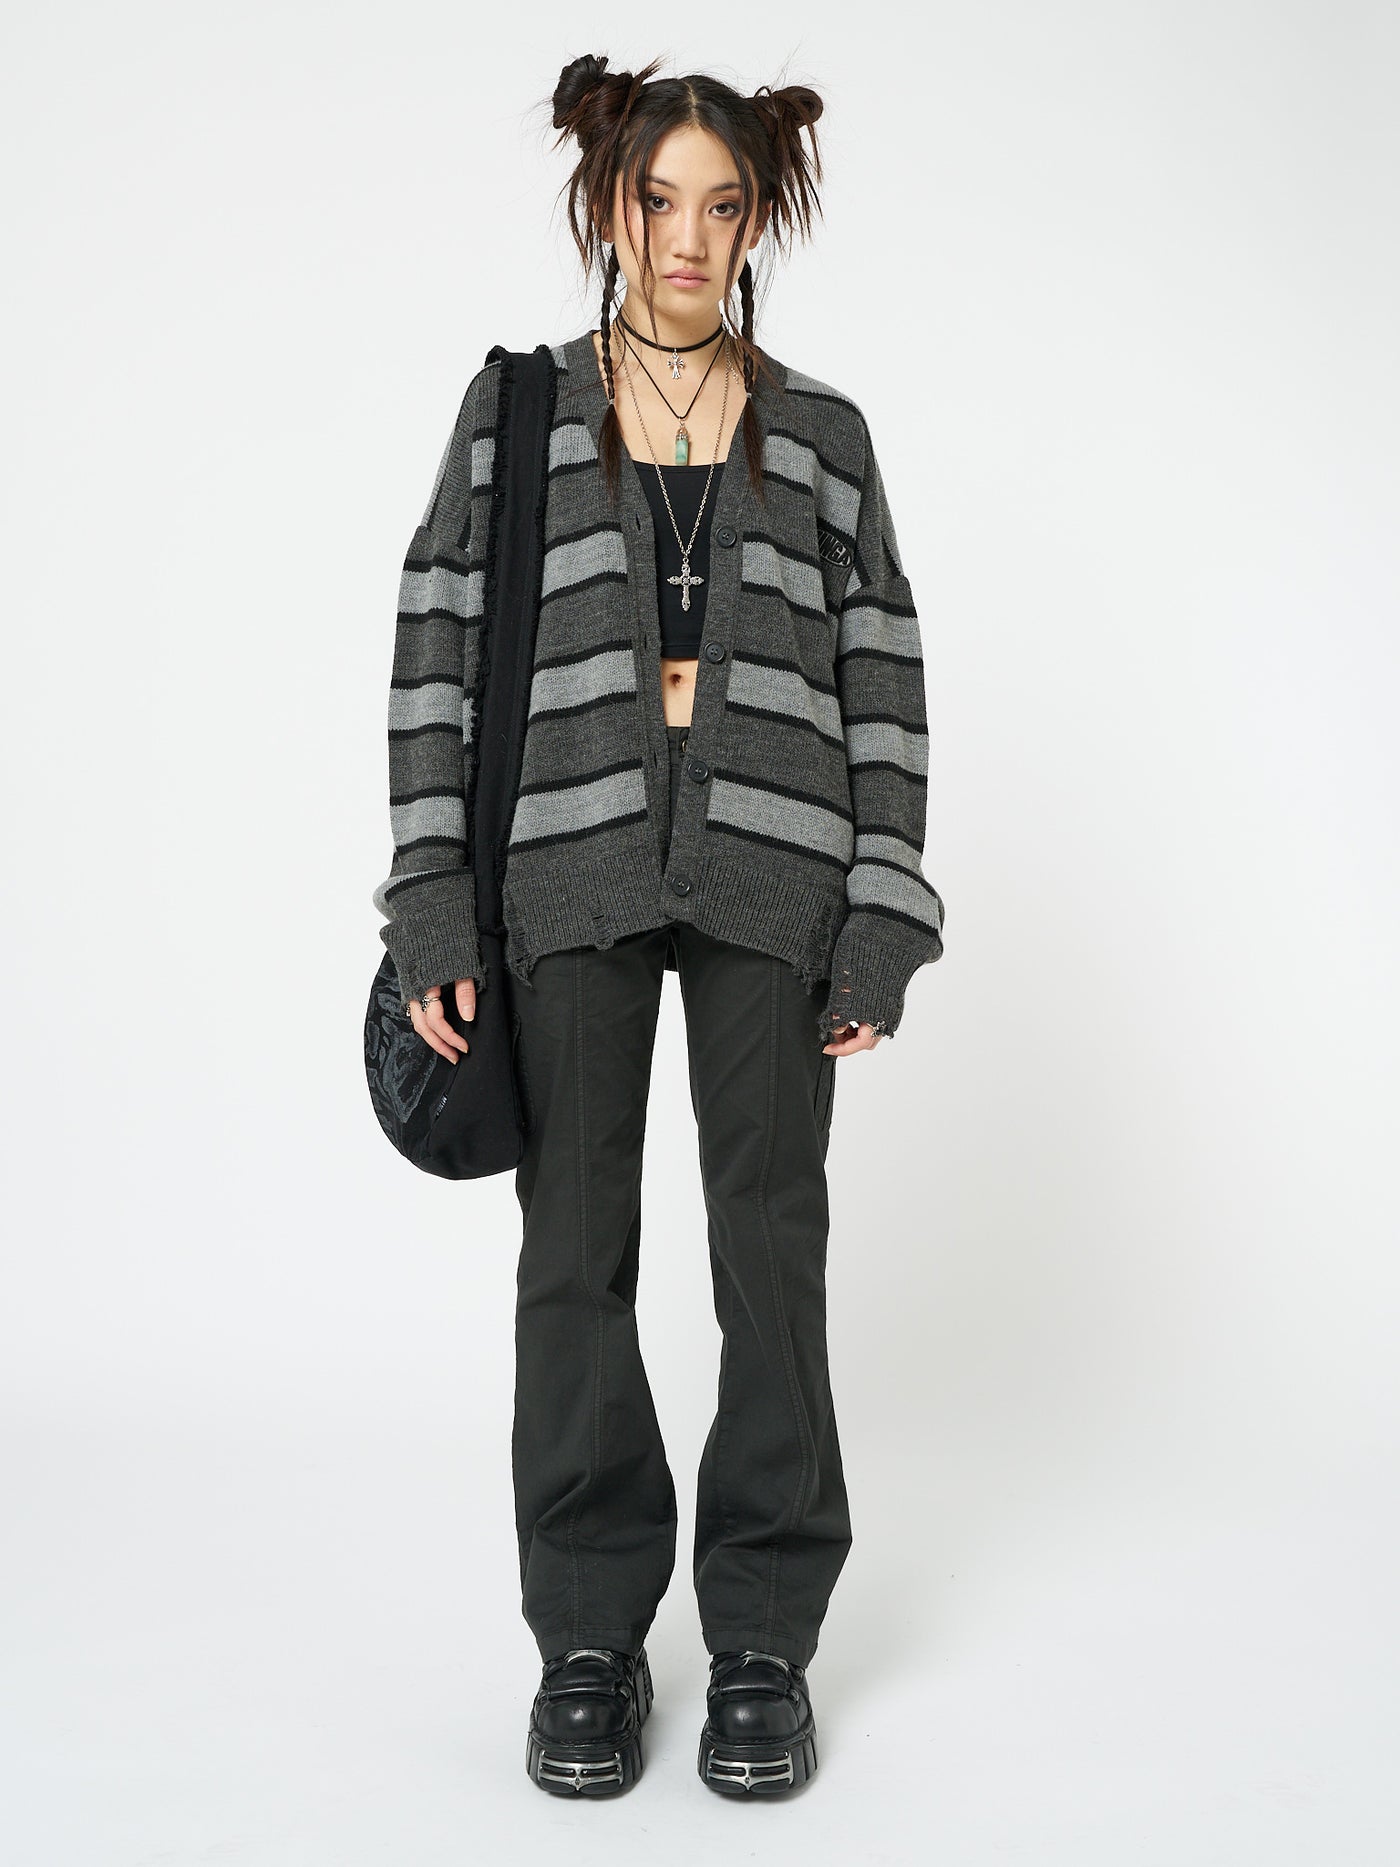 Neesa Grey & Black Stripe Knit Cardigan - Minga EU